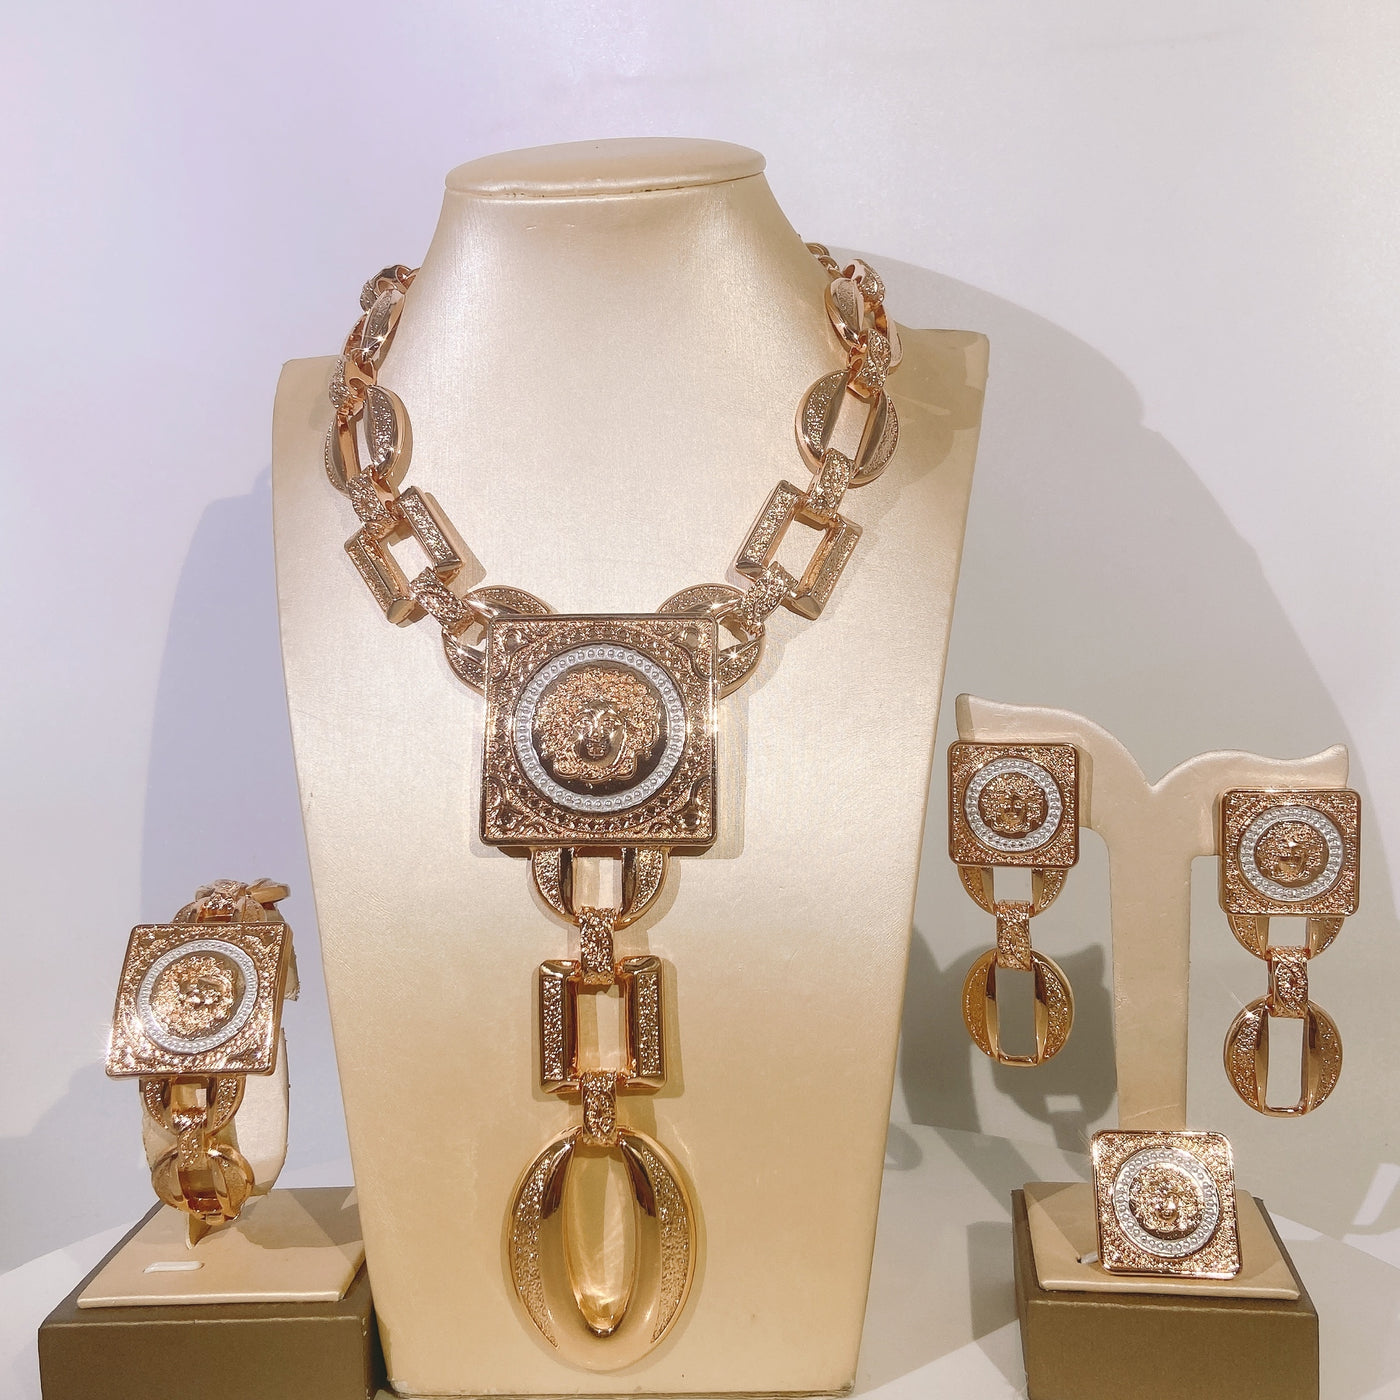 Woman Necklace Jewelry Set